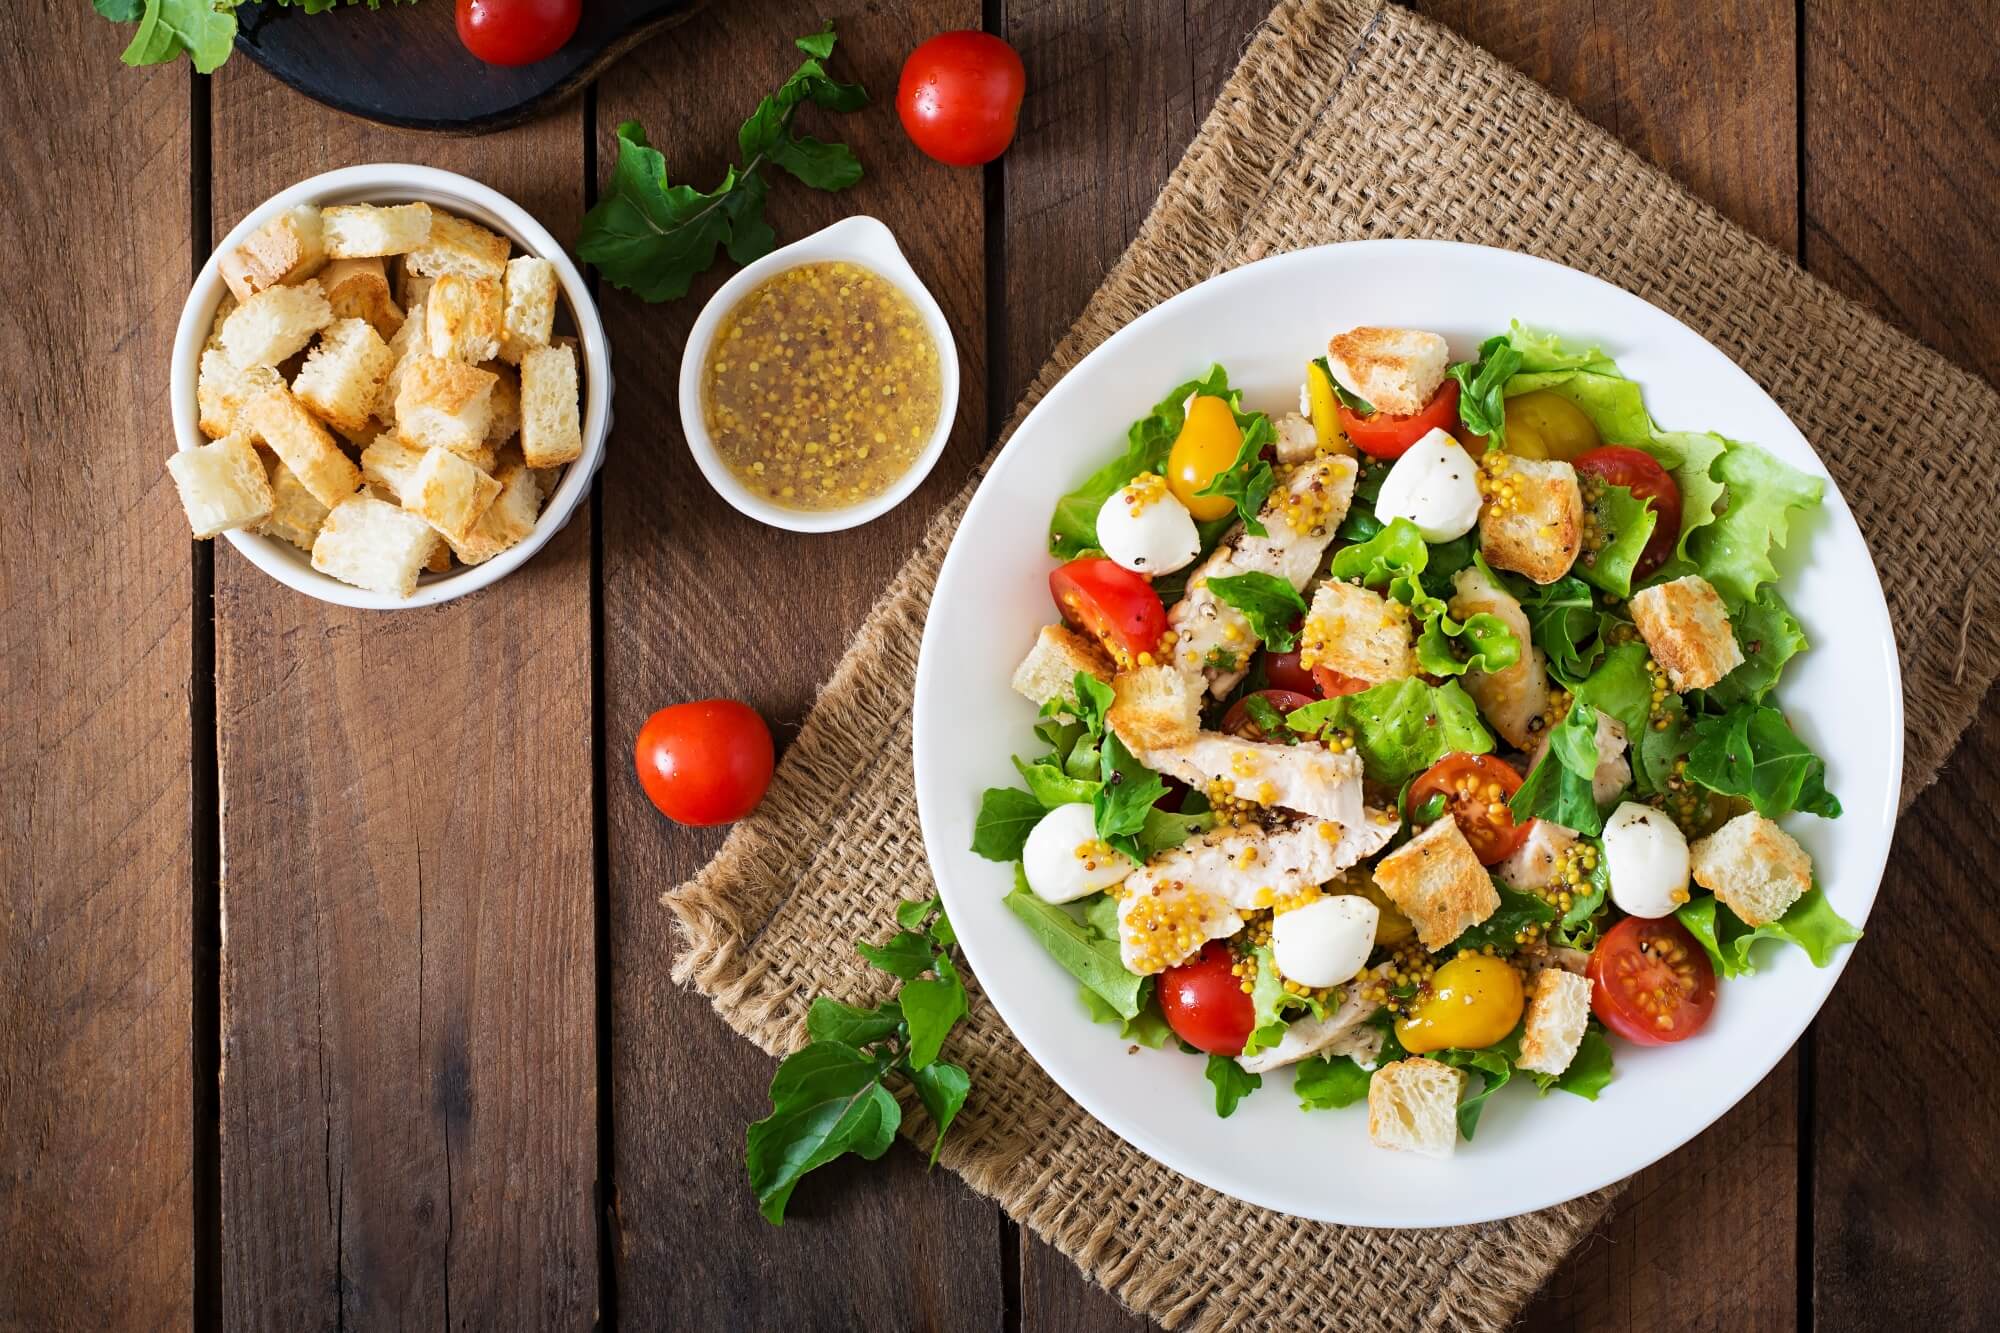 Salat & Kalorien: So wird Grünzeug zur Kalorienbombe